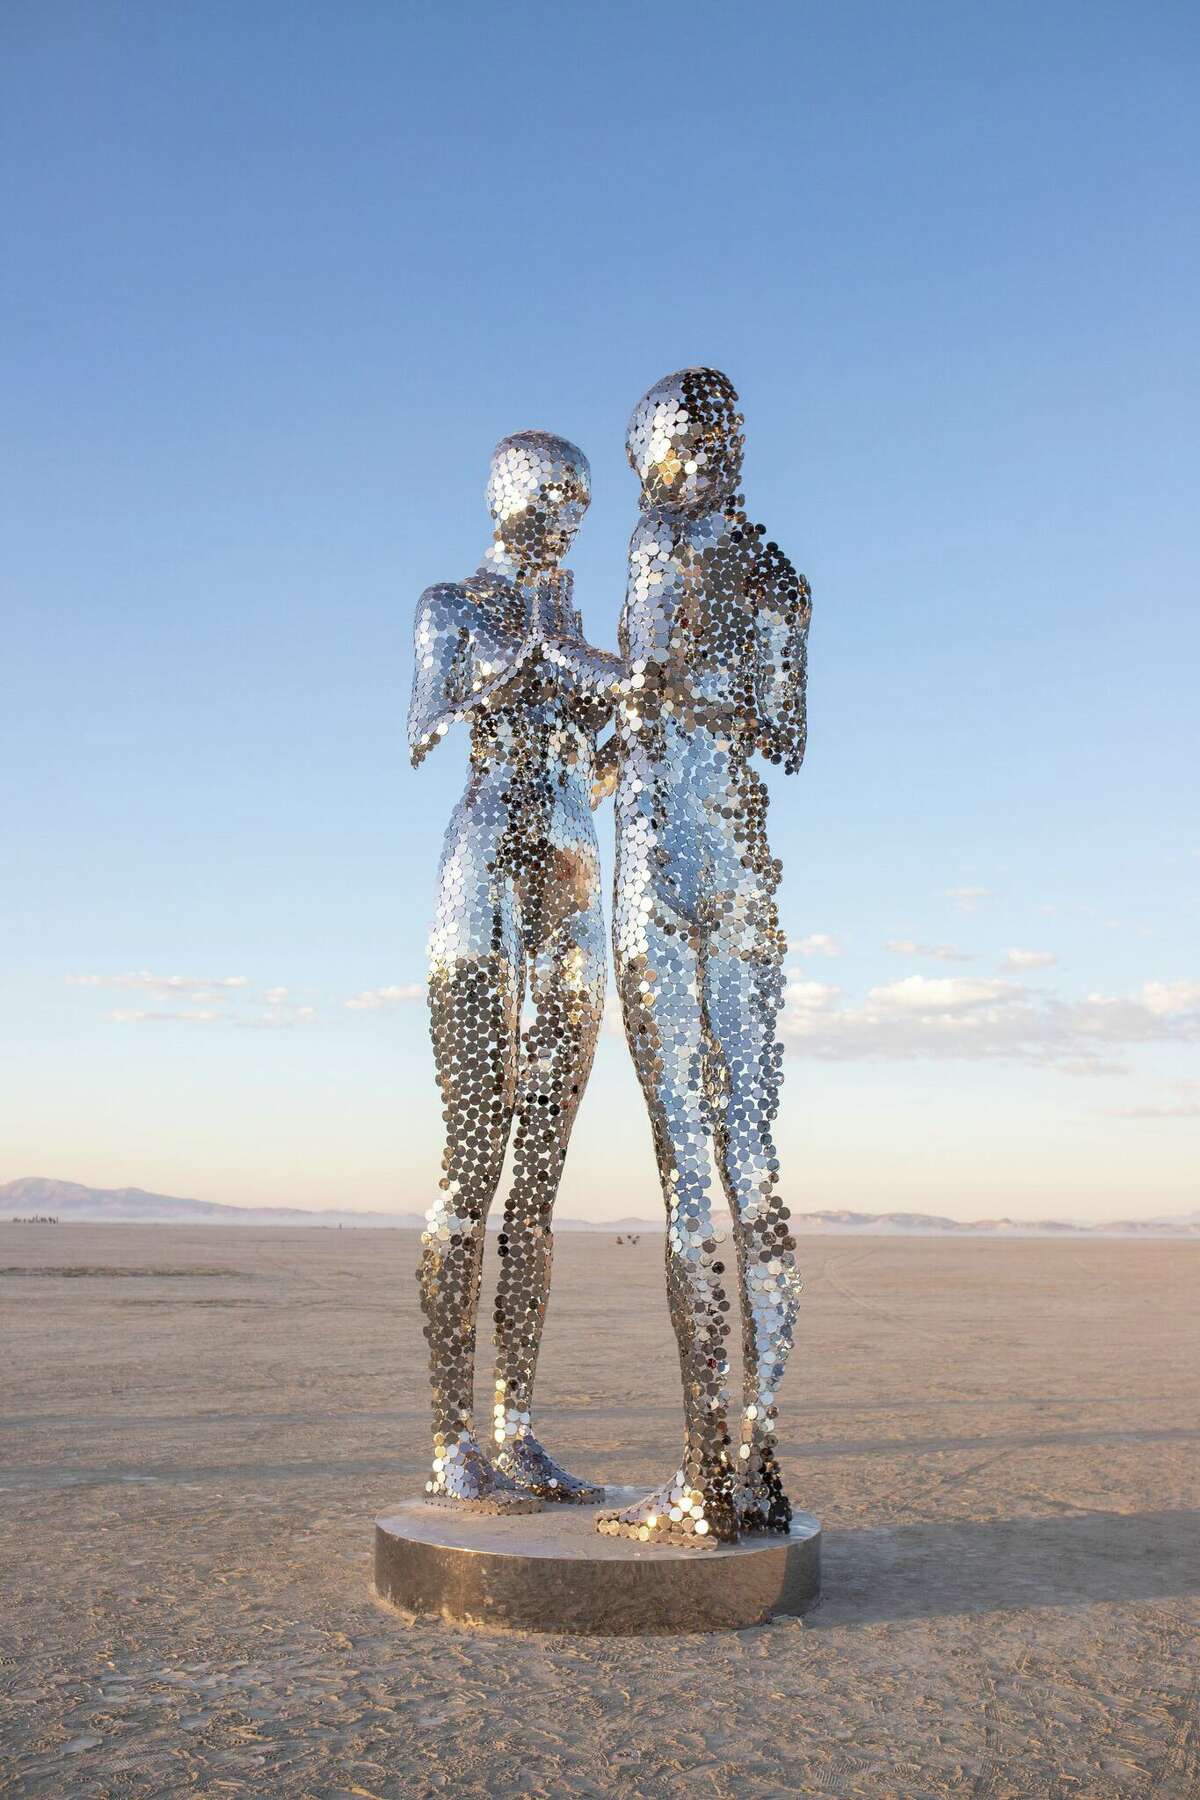 Sculpture of Michael Benesti at Burning Man 2022 in the Black Rock Desert in Gerlach, Nevada.